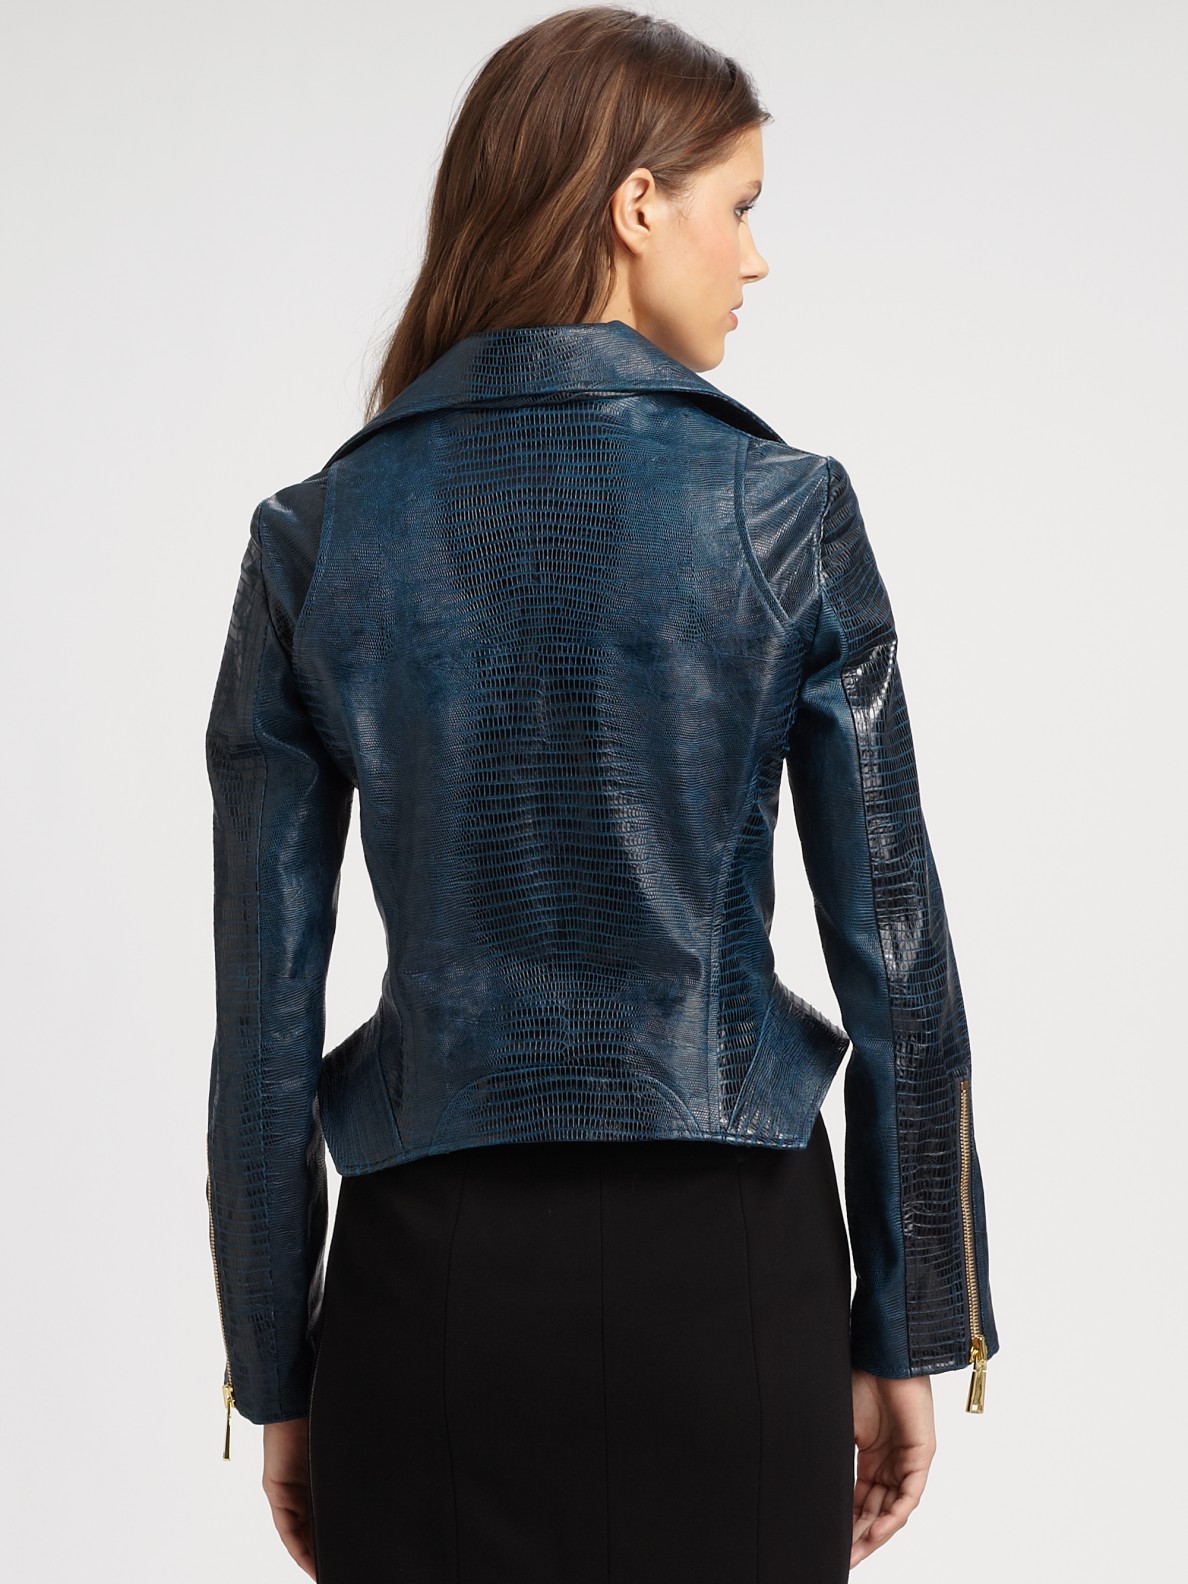 Lyst - Elie Tahari Leather Francis Jacket in Blue